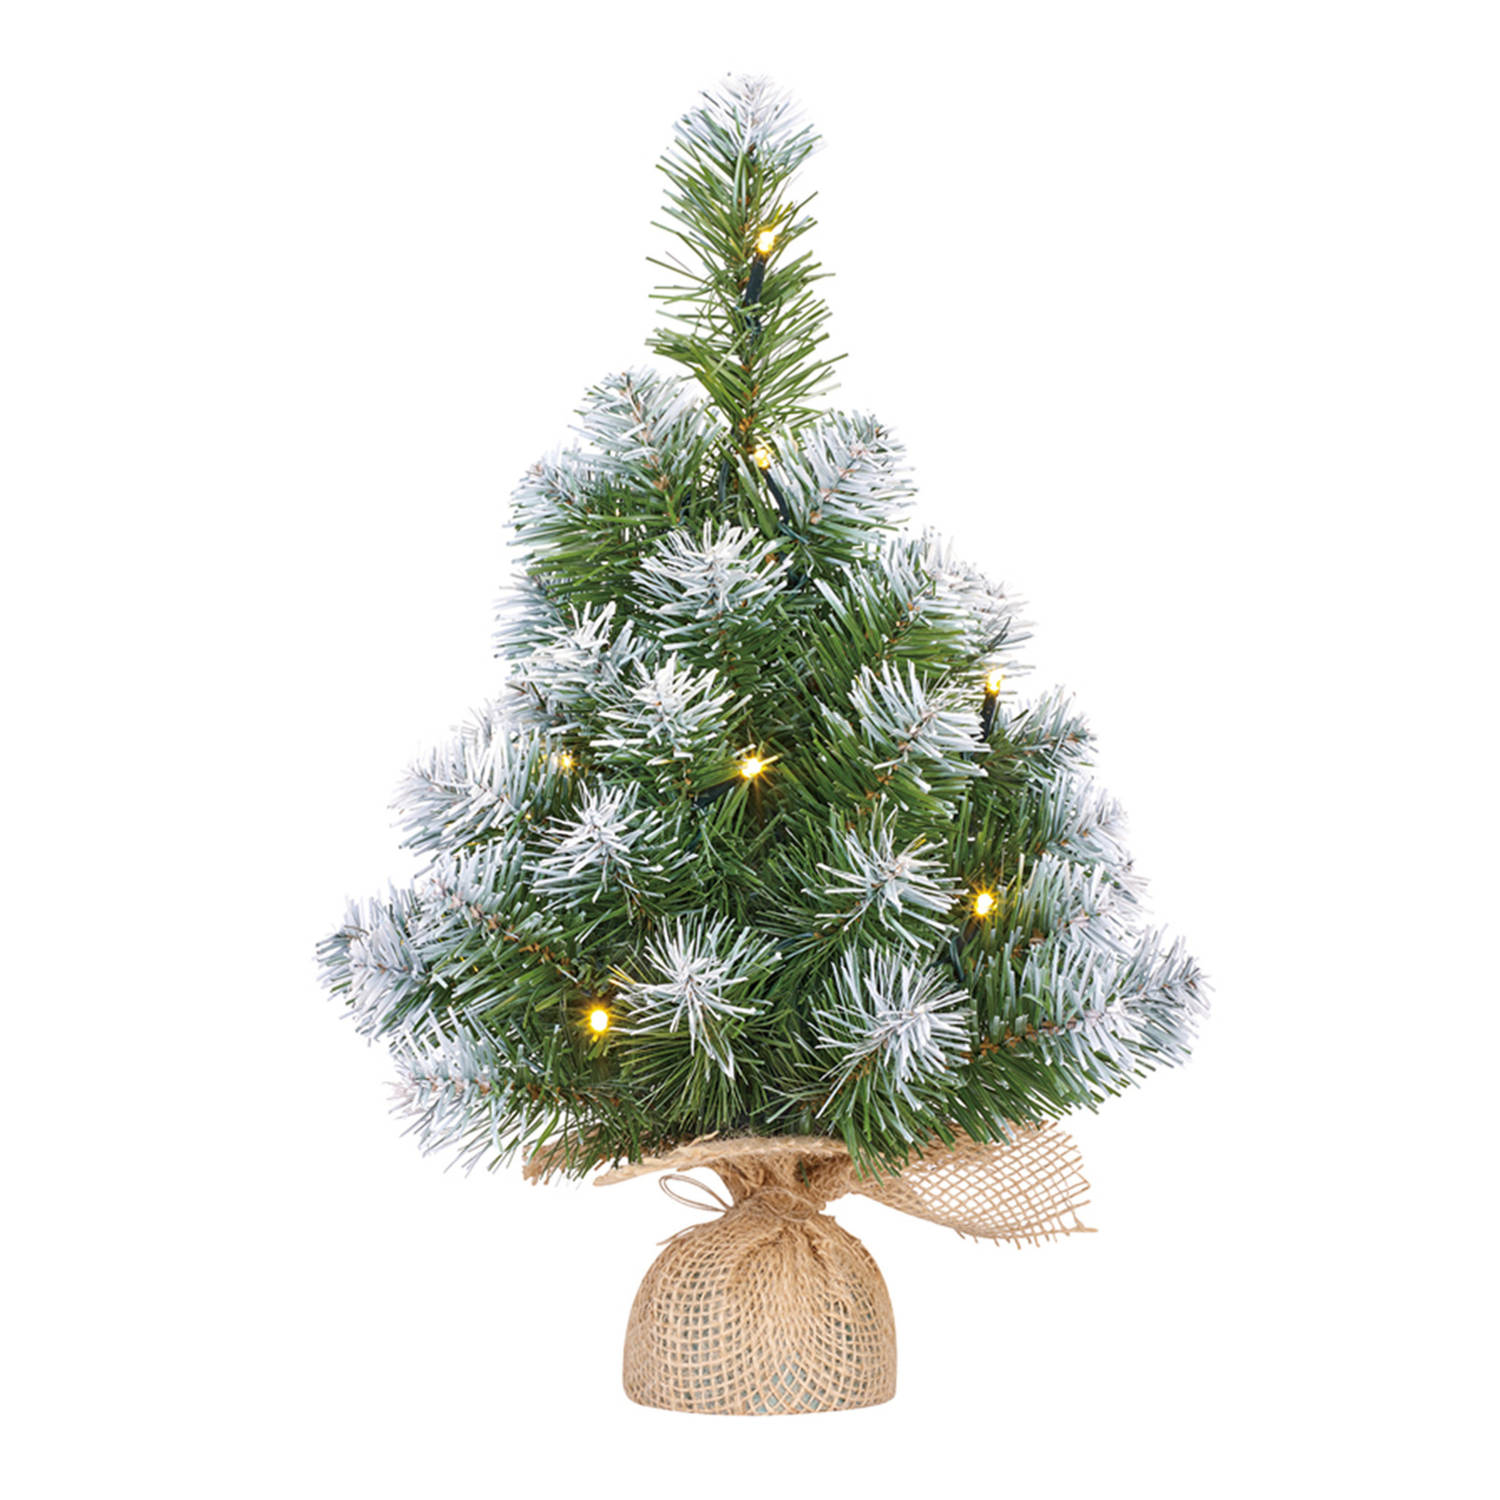 1x Mini kunst kerstboom met 10 LED lampjes en 45 cm - Kunstkerstboom Blokker